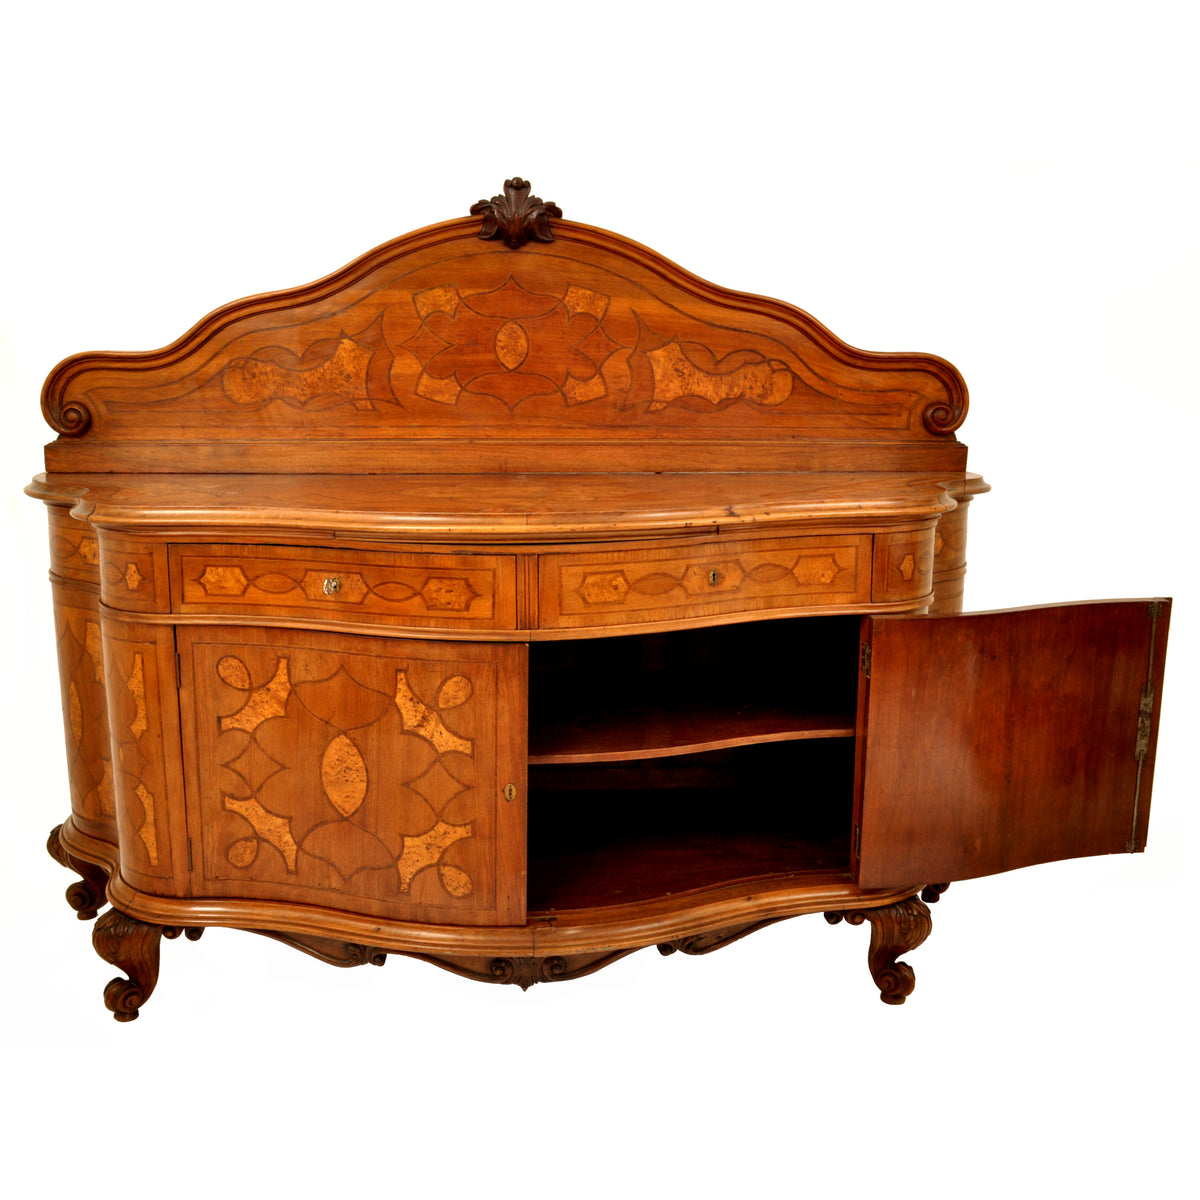 Antique German Baroque Inlaid Marquetry Cabinet / Sideboard / Buffet / Server, circa 1880